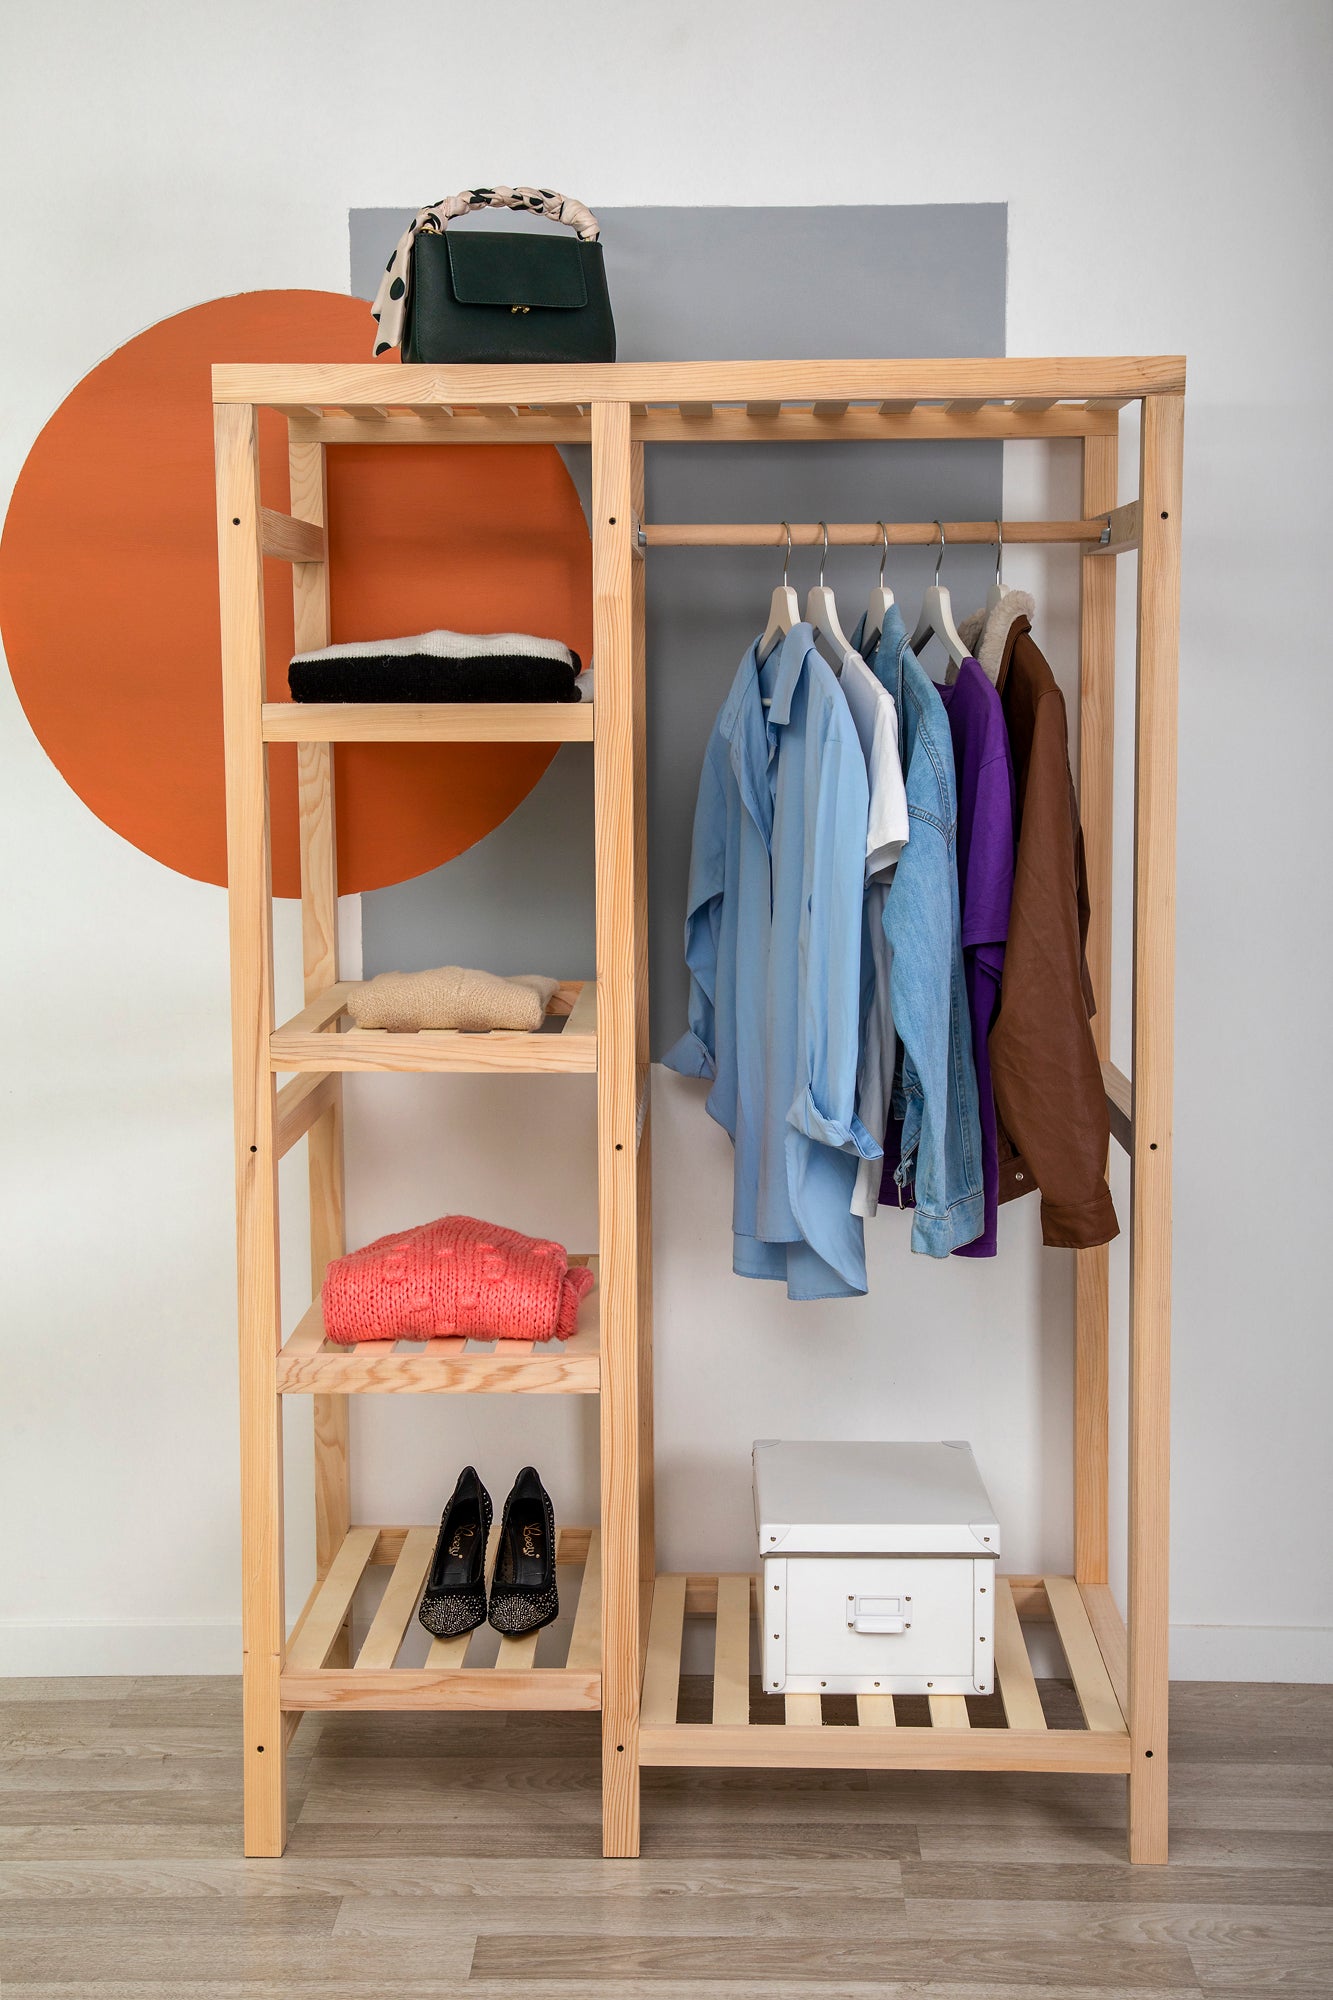 Randa 55 Solid Pine Wood Handmade Open Wardrobe with Shelves and Hanger